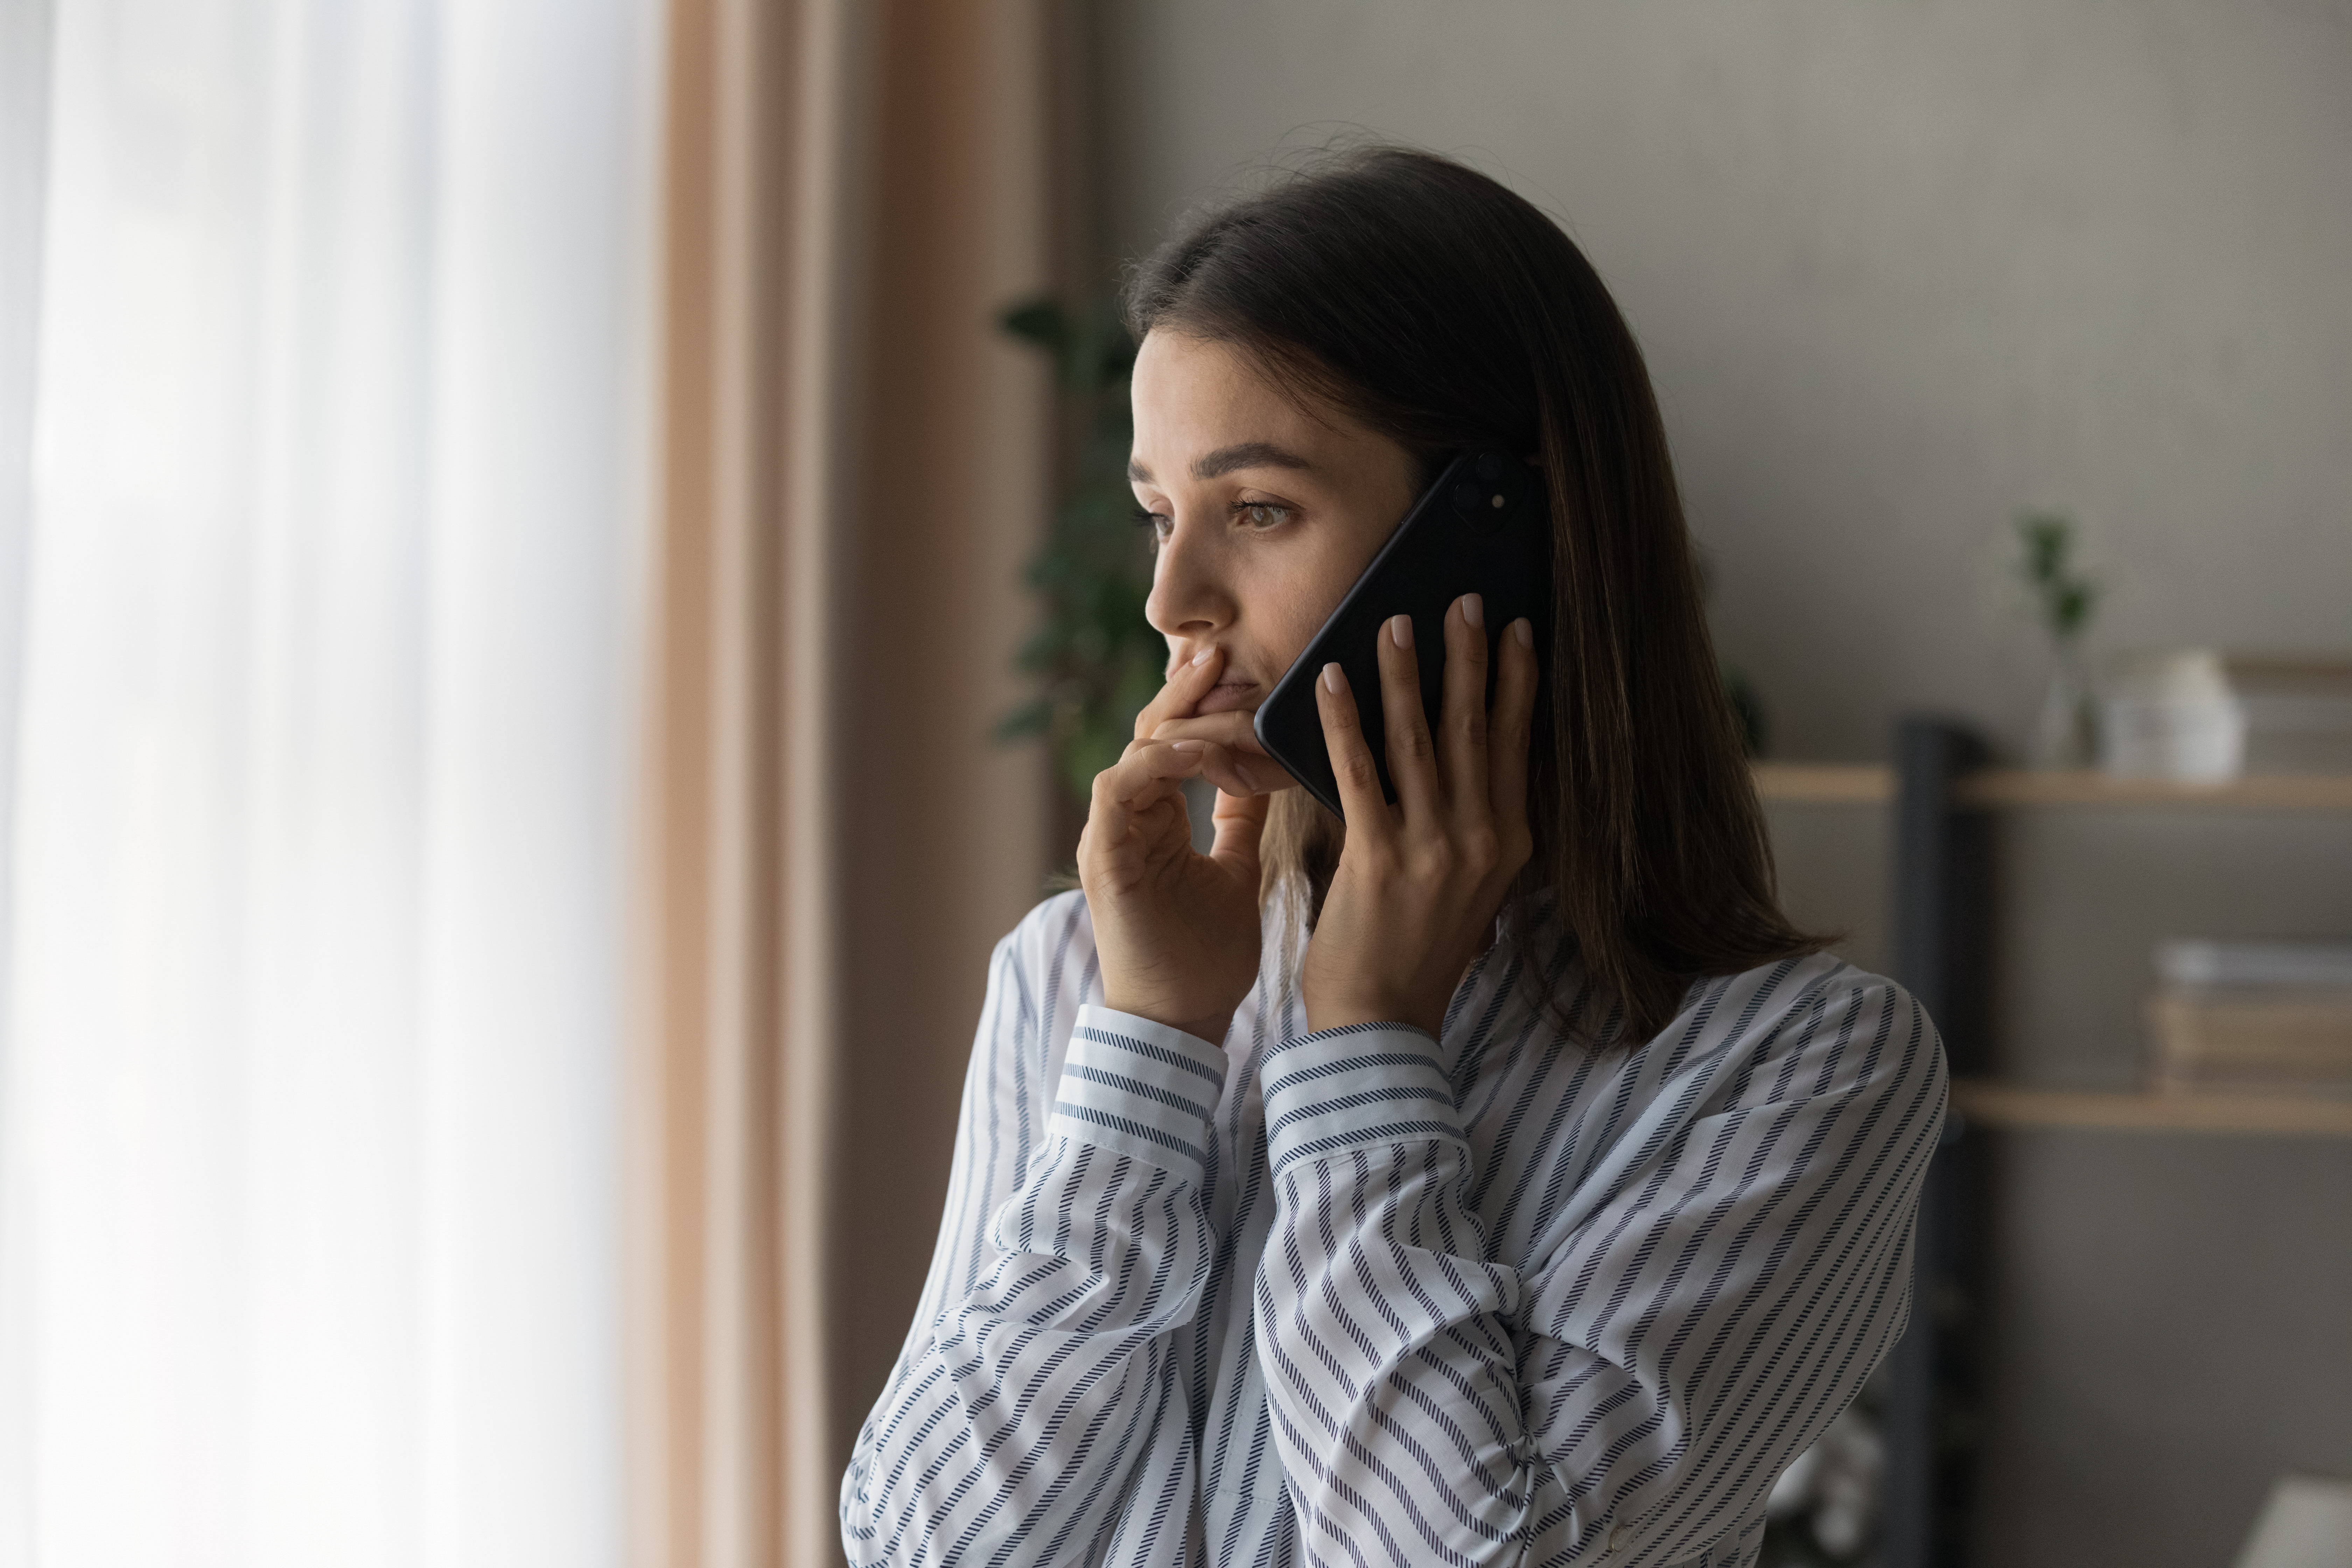 Junges Mädchen am Telefon mit besorgtem Blick | Quelle: Shutterstock